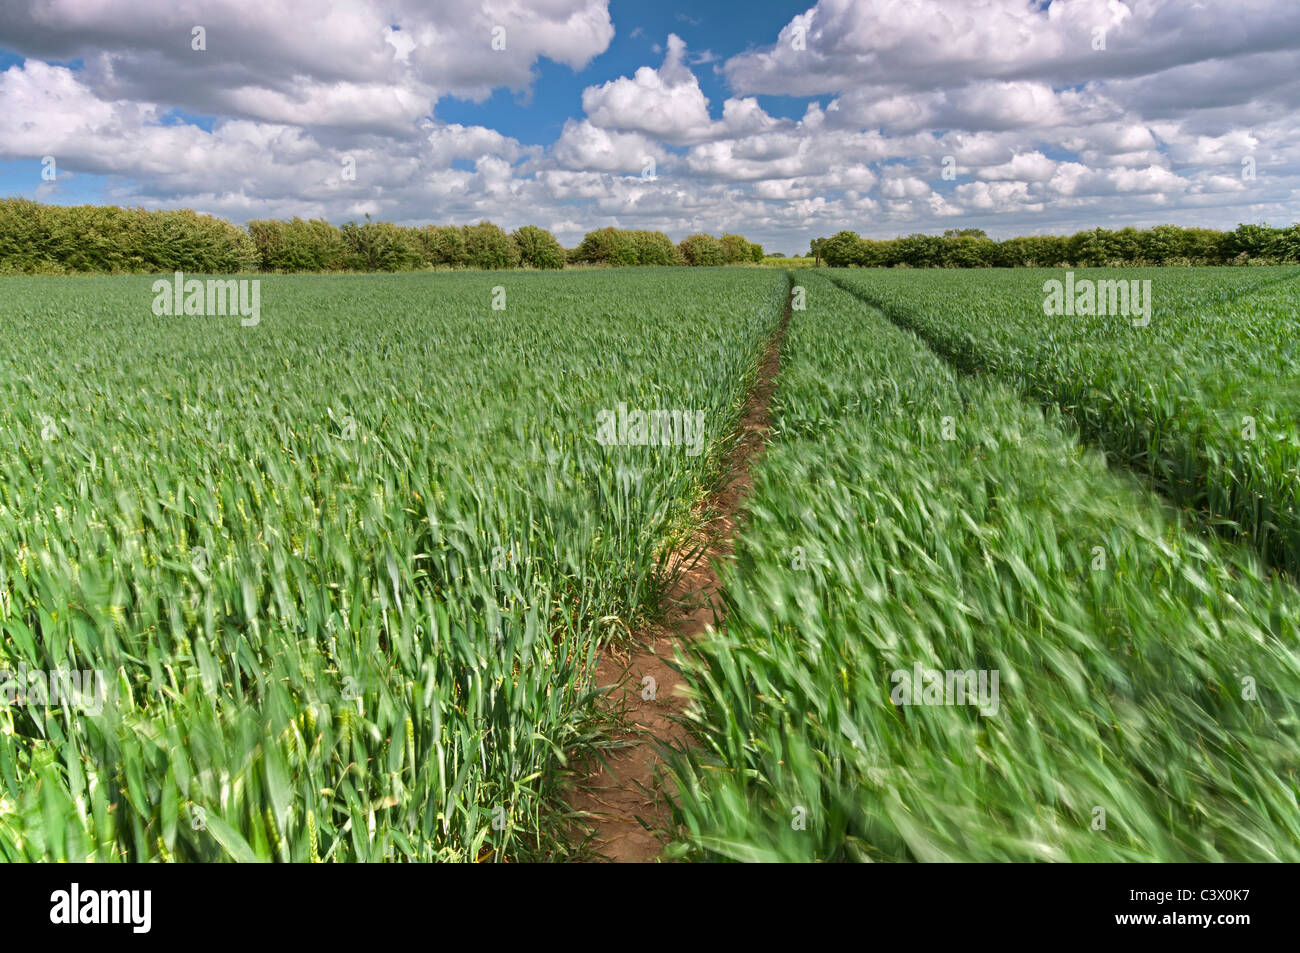 Corn crop growing in a field near Wysall, Nottinghamshire, May 2011. Stock Photo